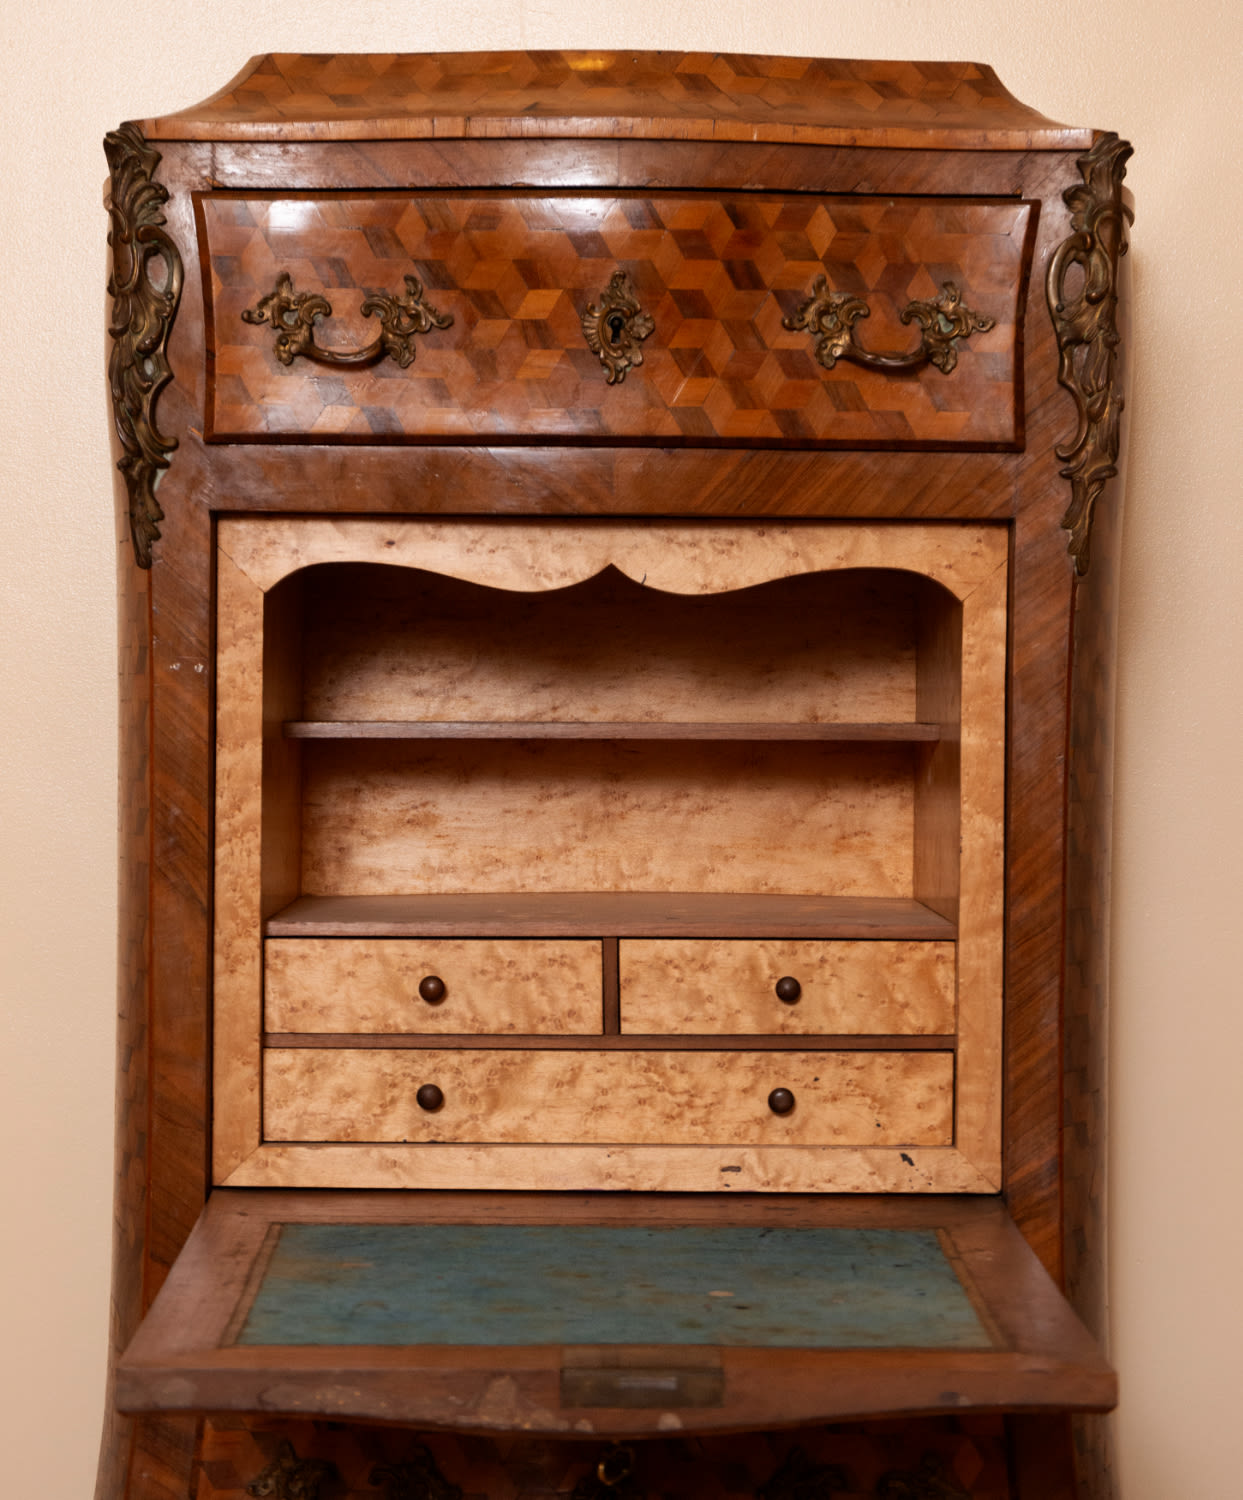 Distinguished Entredos Napoleon III Furniture in ebonized wood and mercury gilded bronze - Image 4 of 5